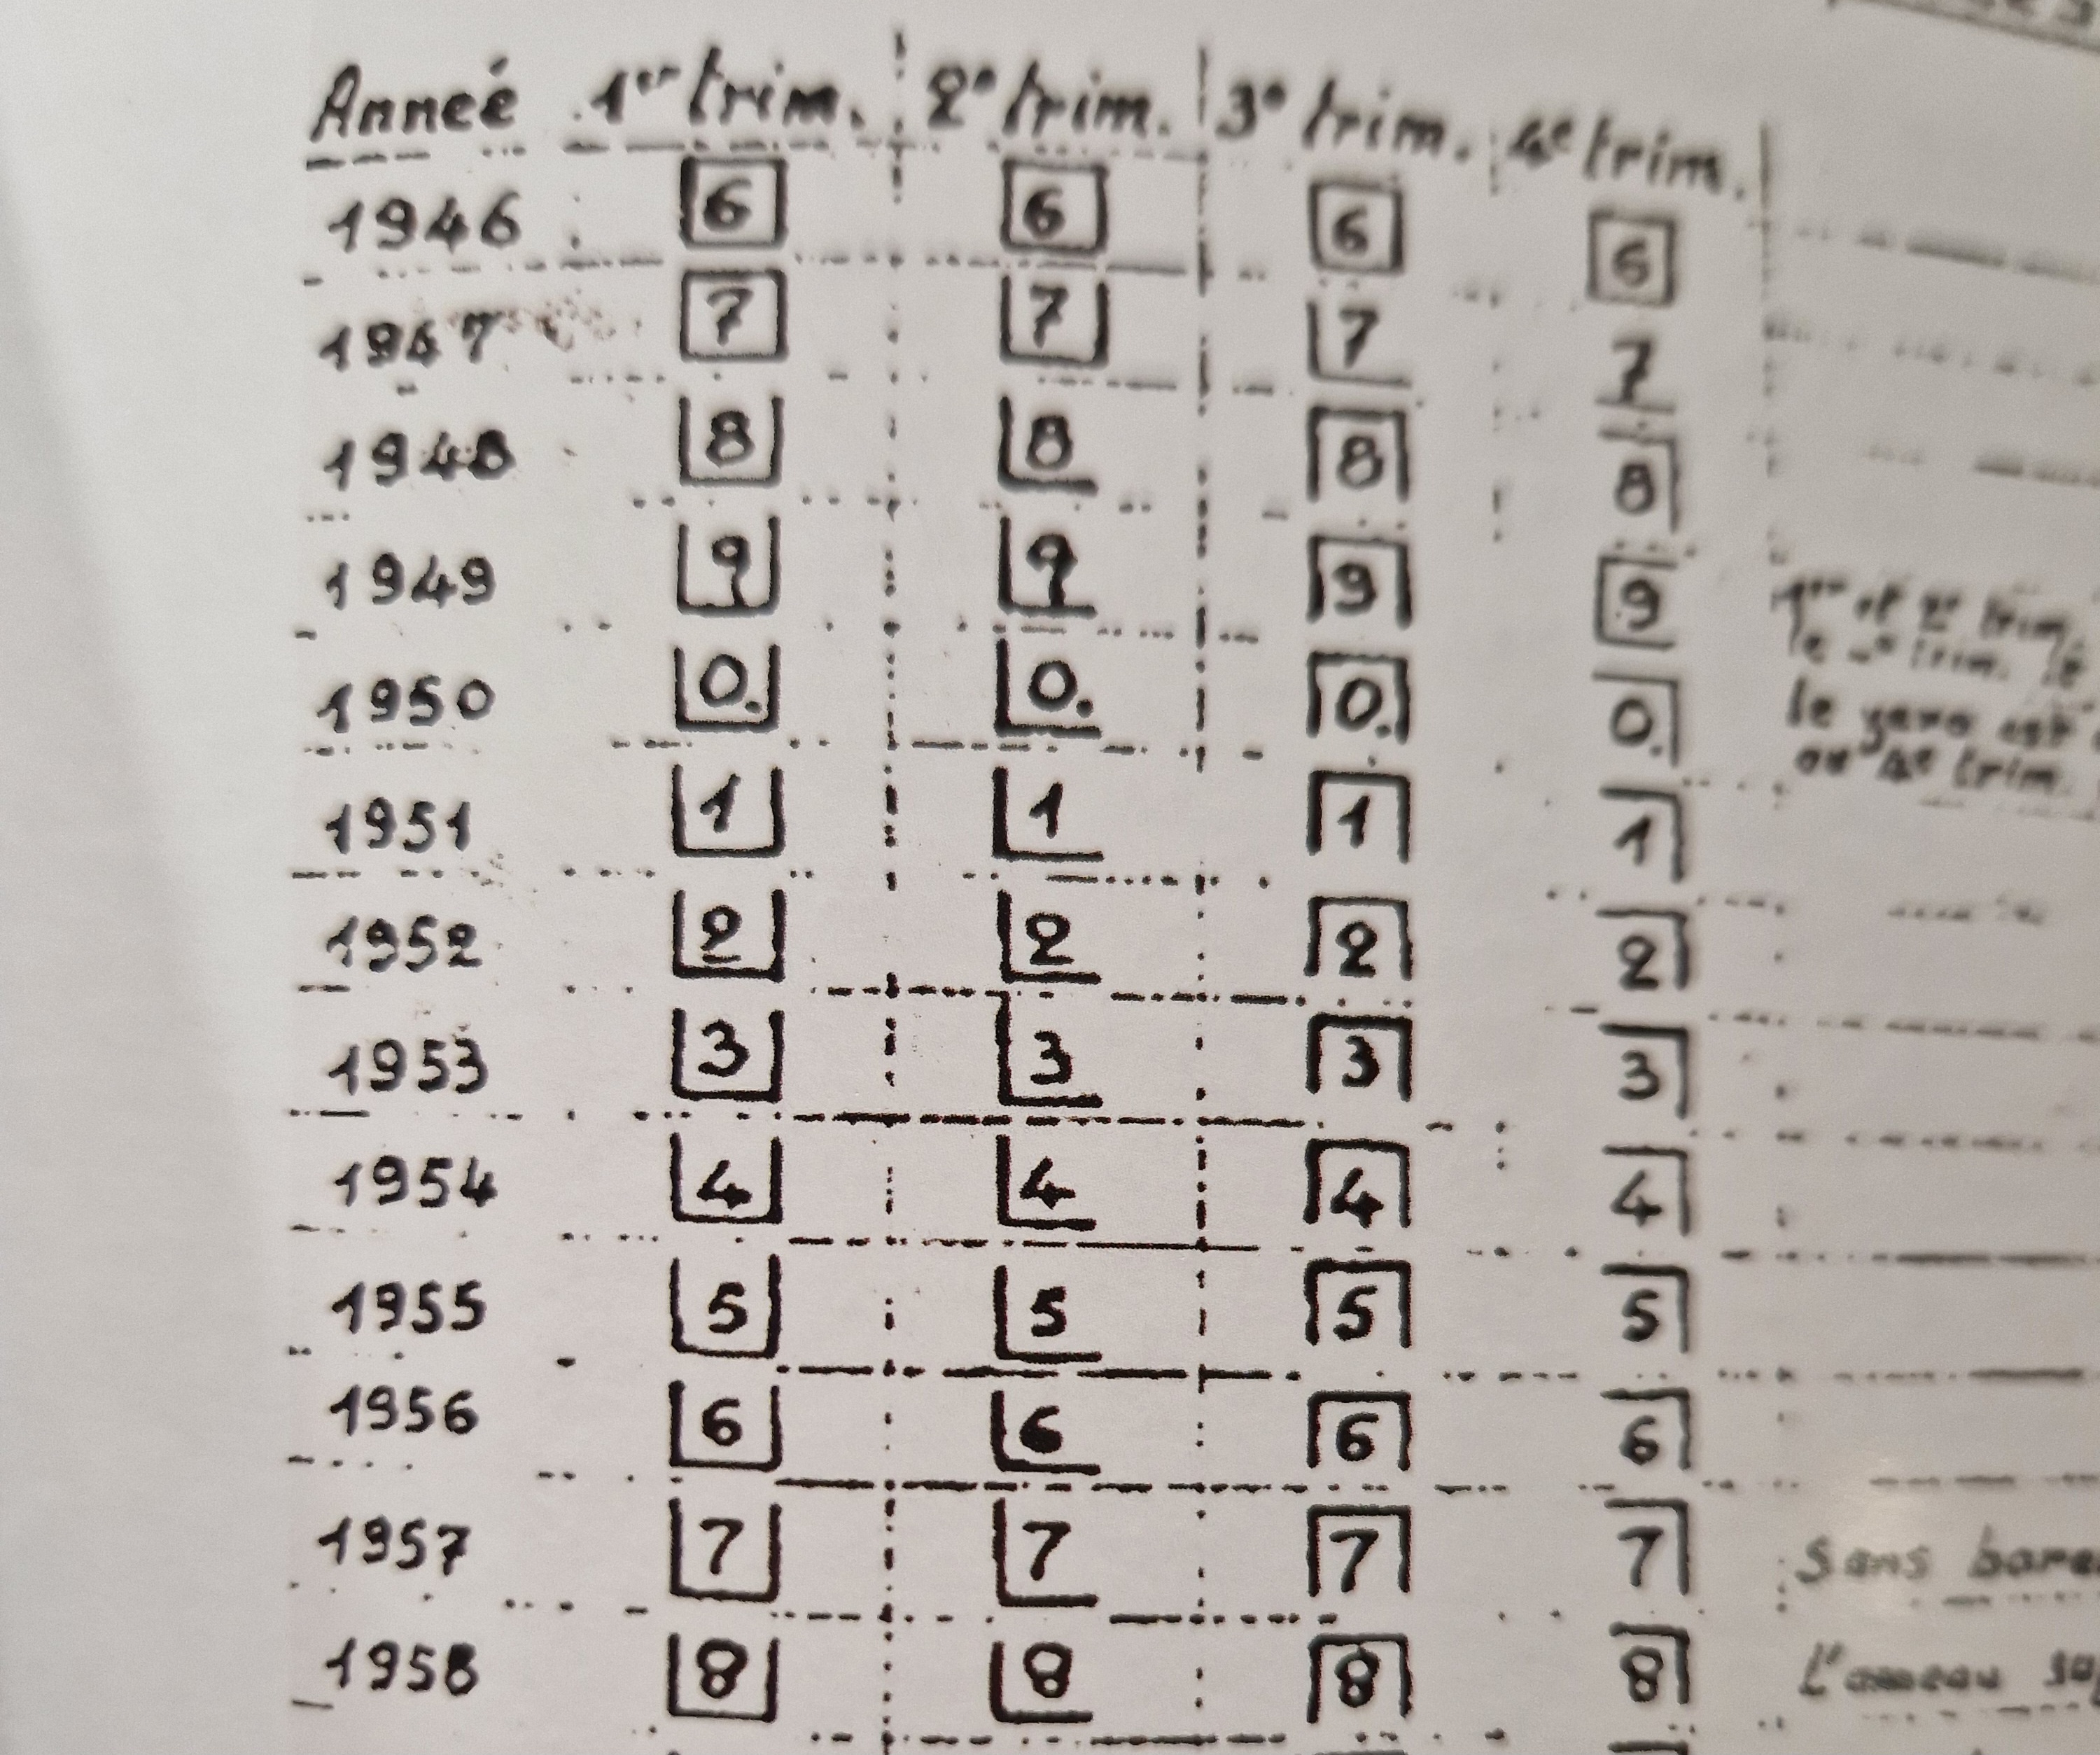 Datation FN 1910 Hhnu